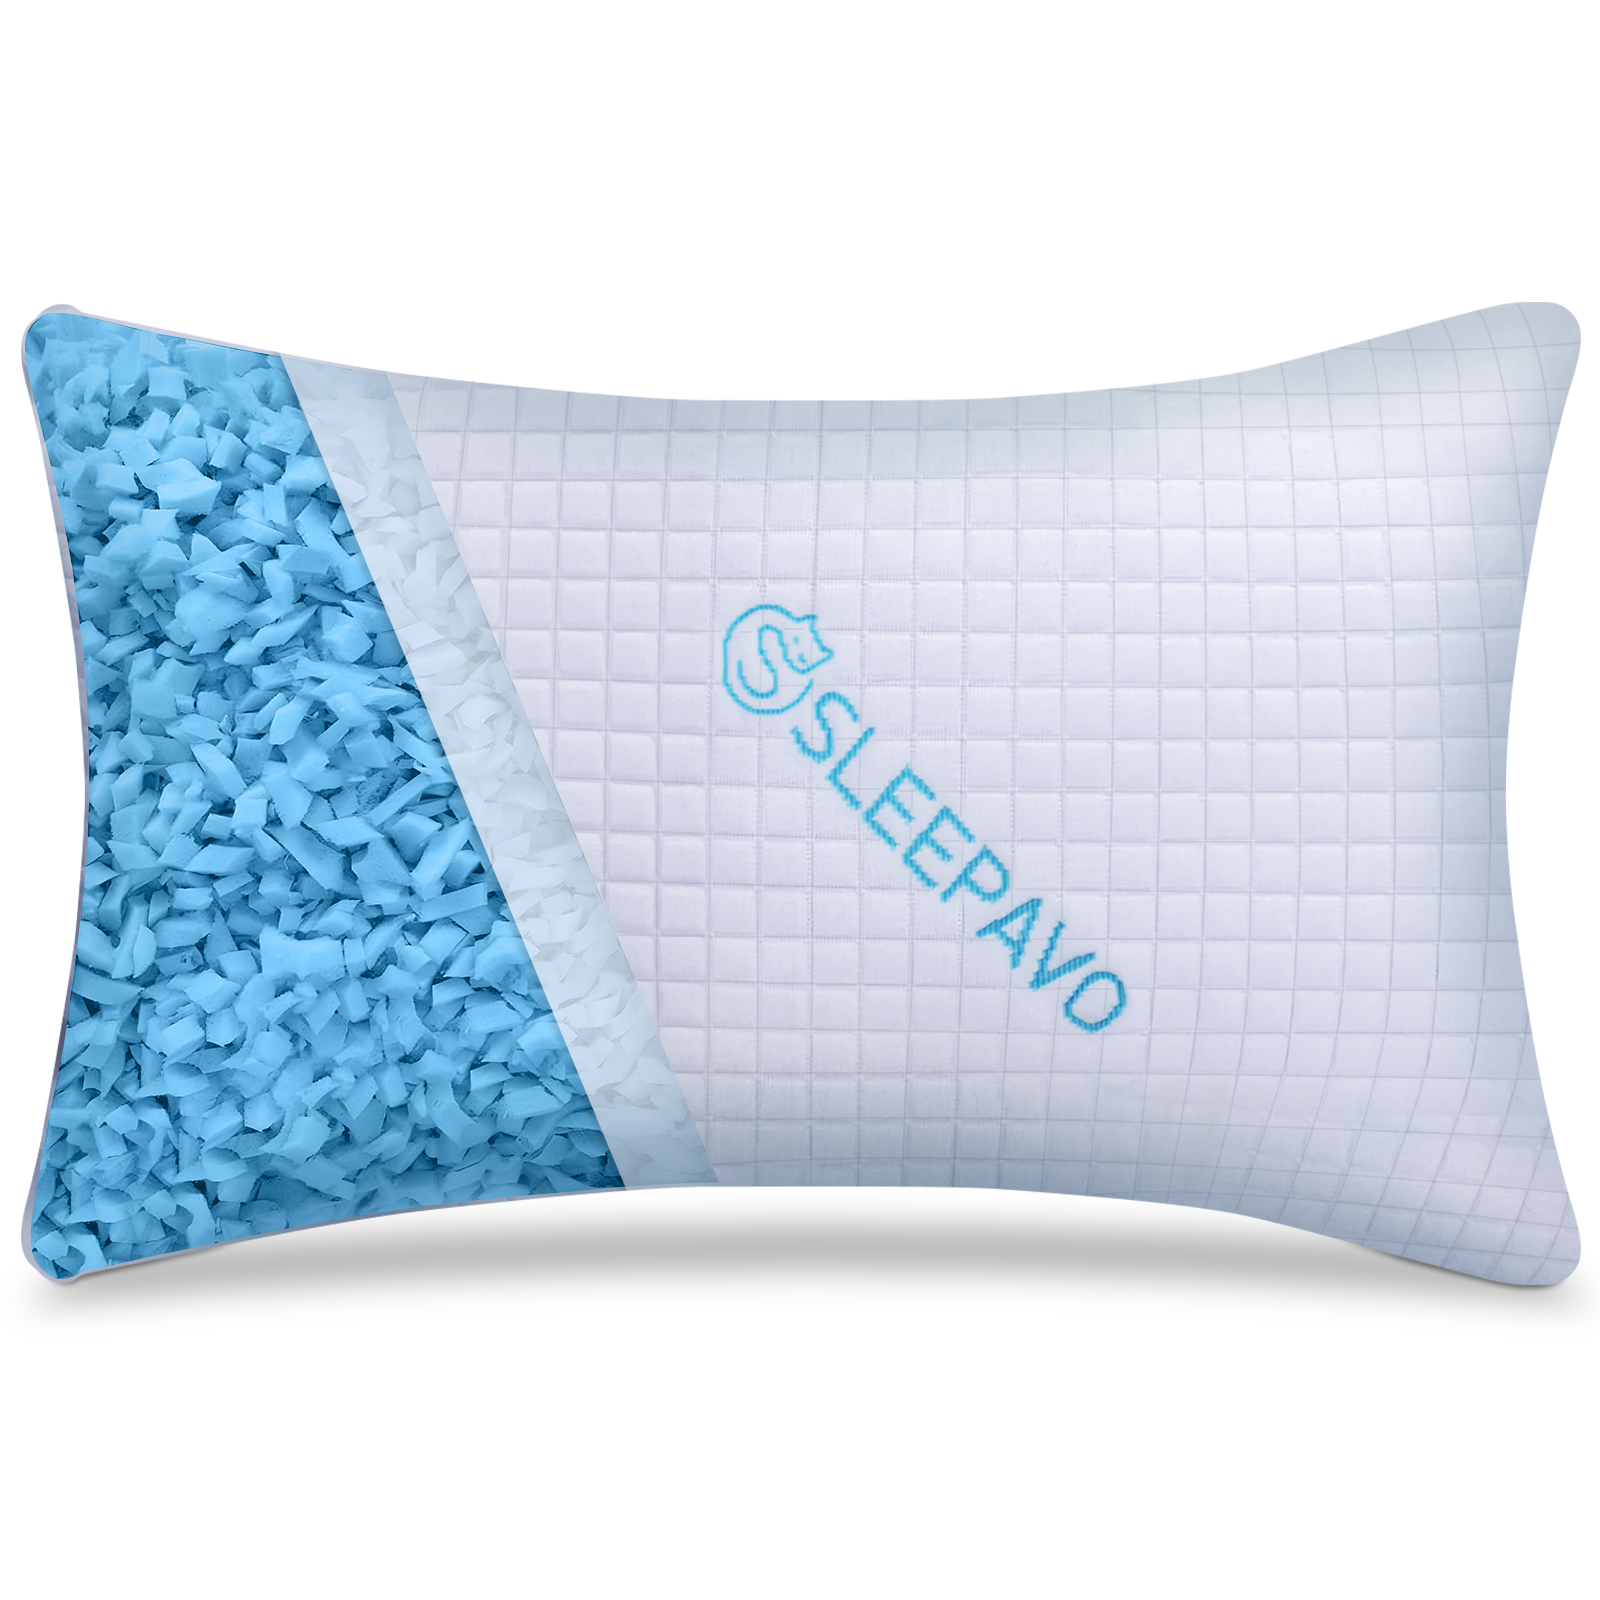 Adjustable Shredded Memory Foam Pillow (Queen Size)